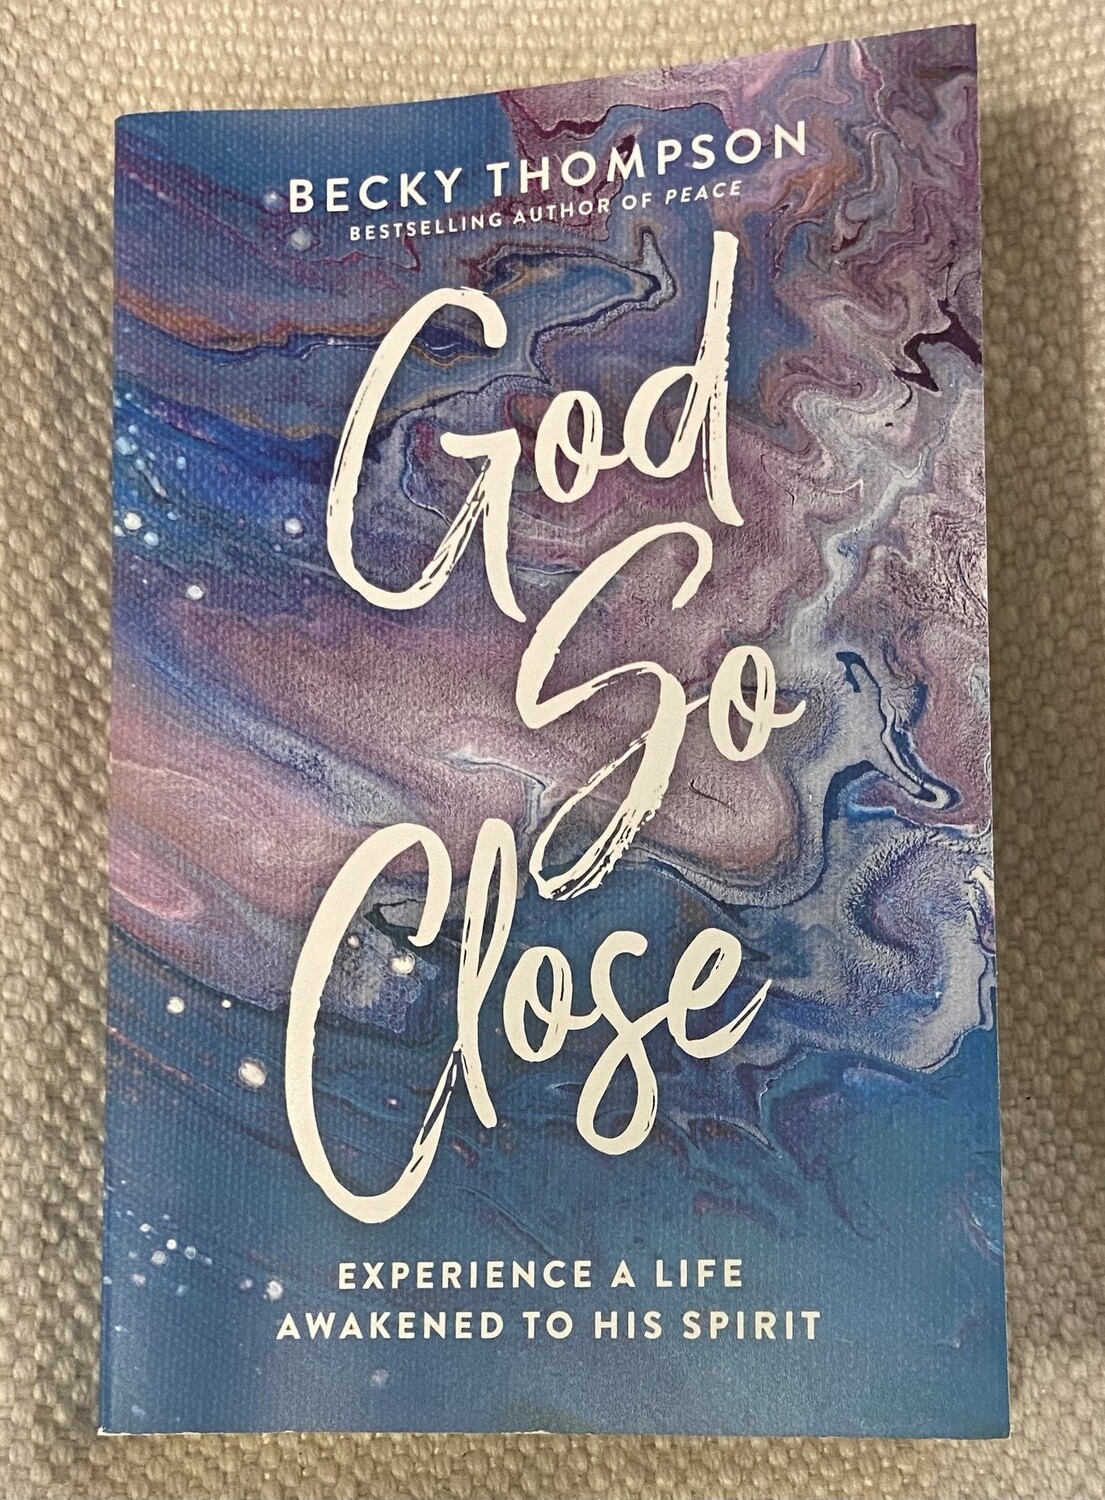 God So Close: Experience a Life Awakened to His Spirit